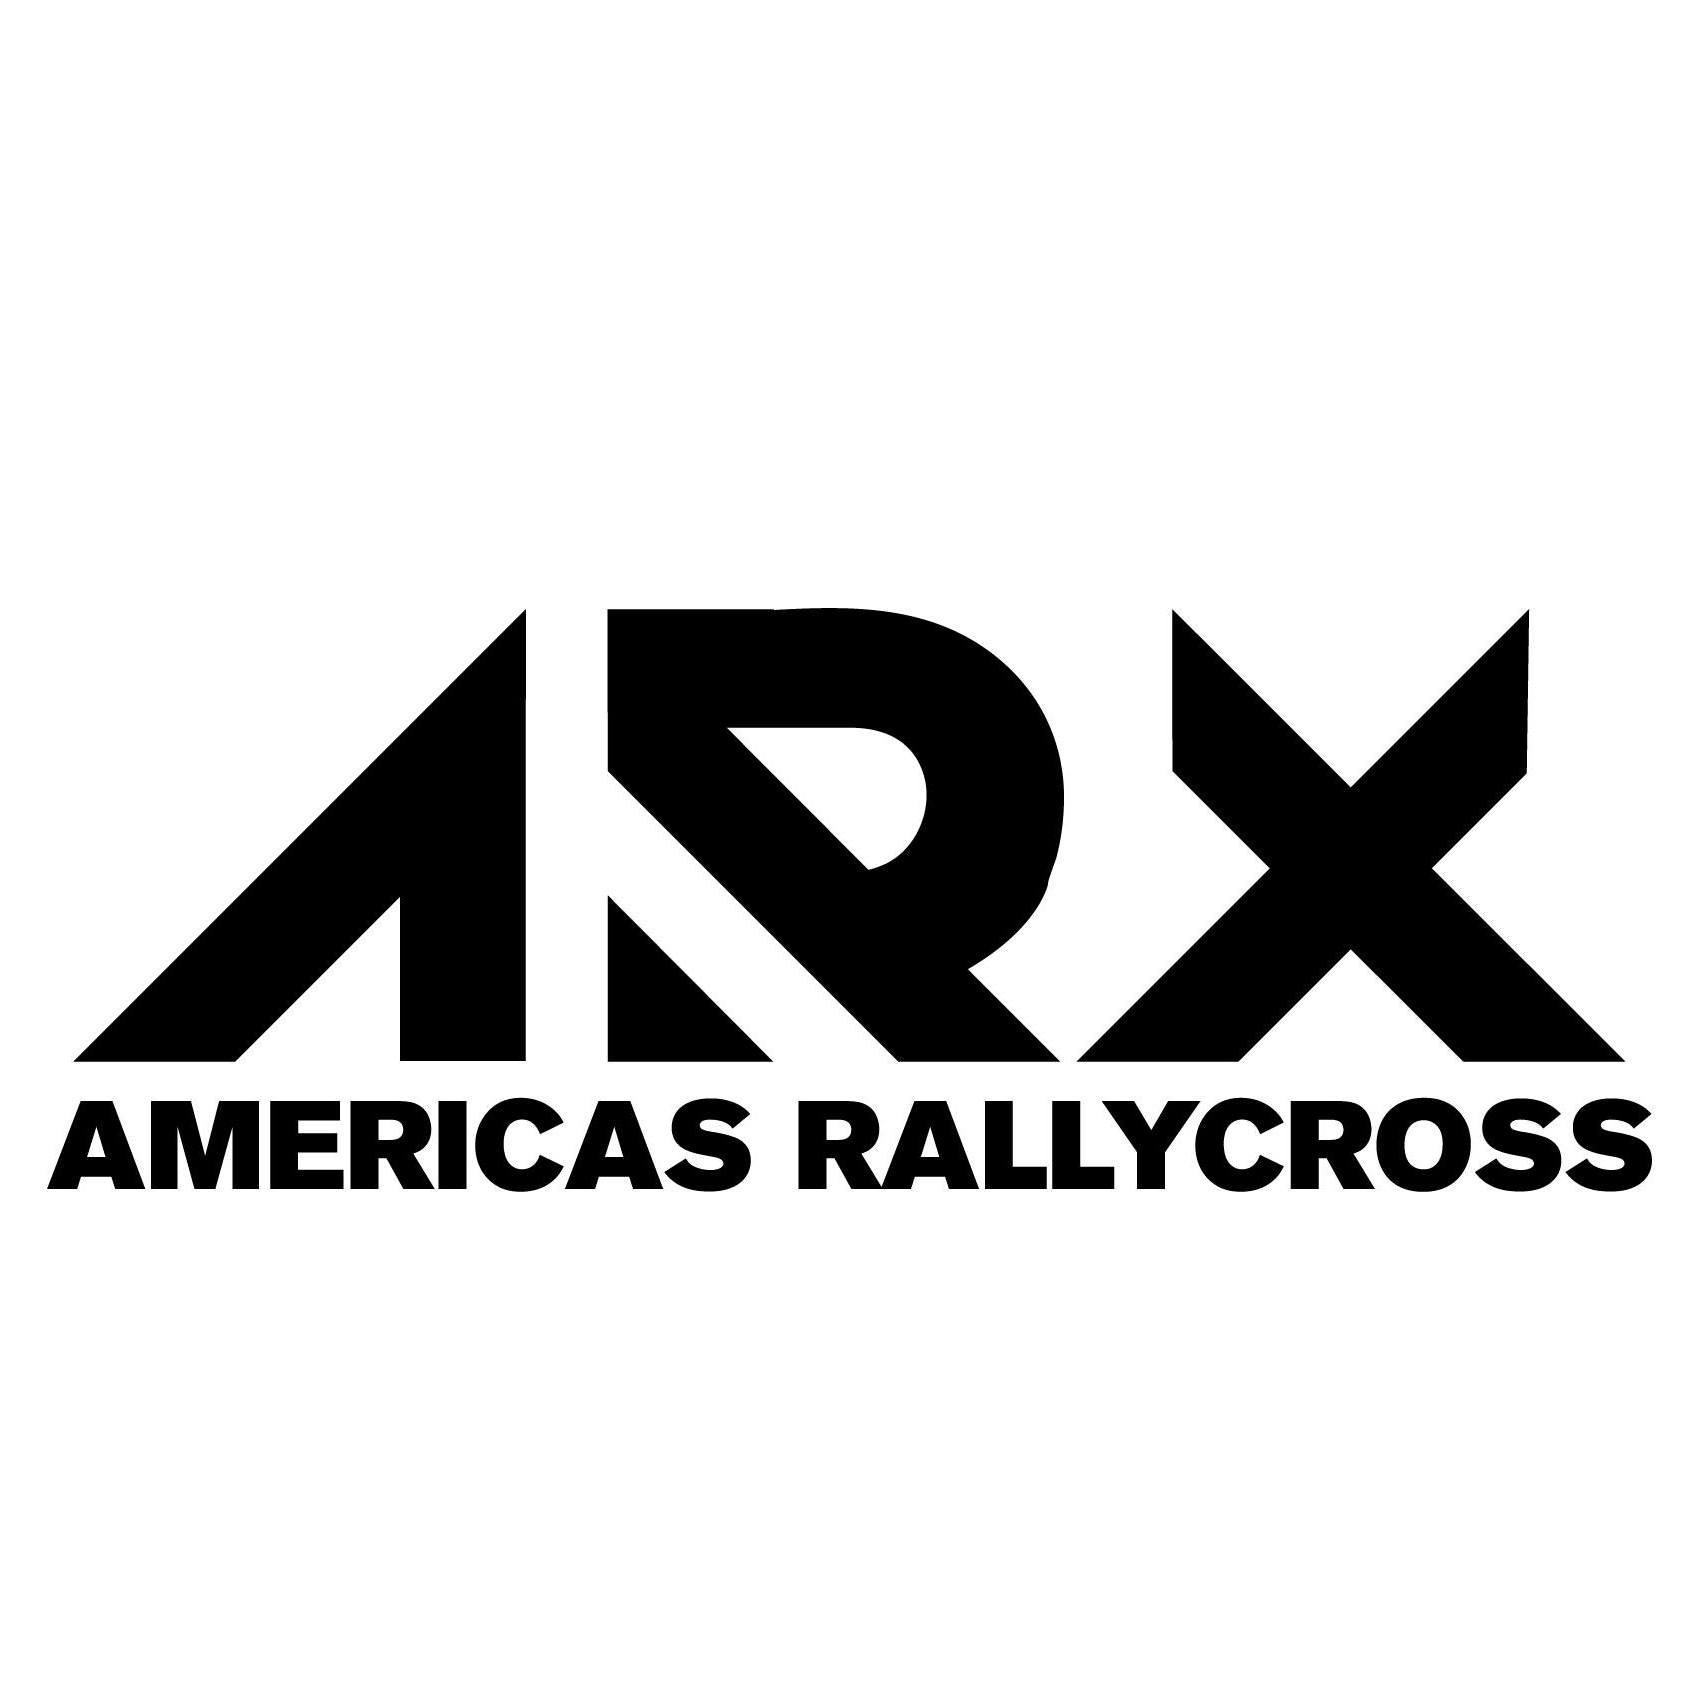 Americas Rallycross